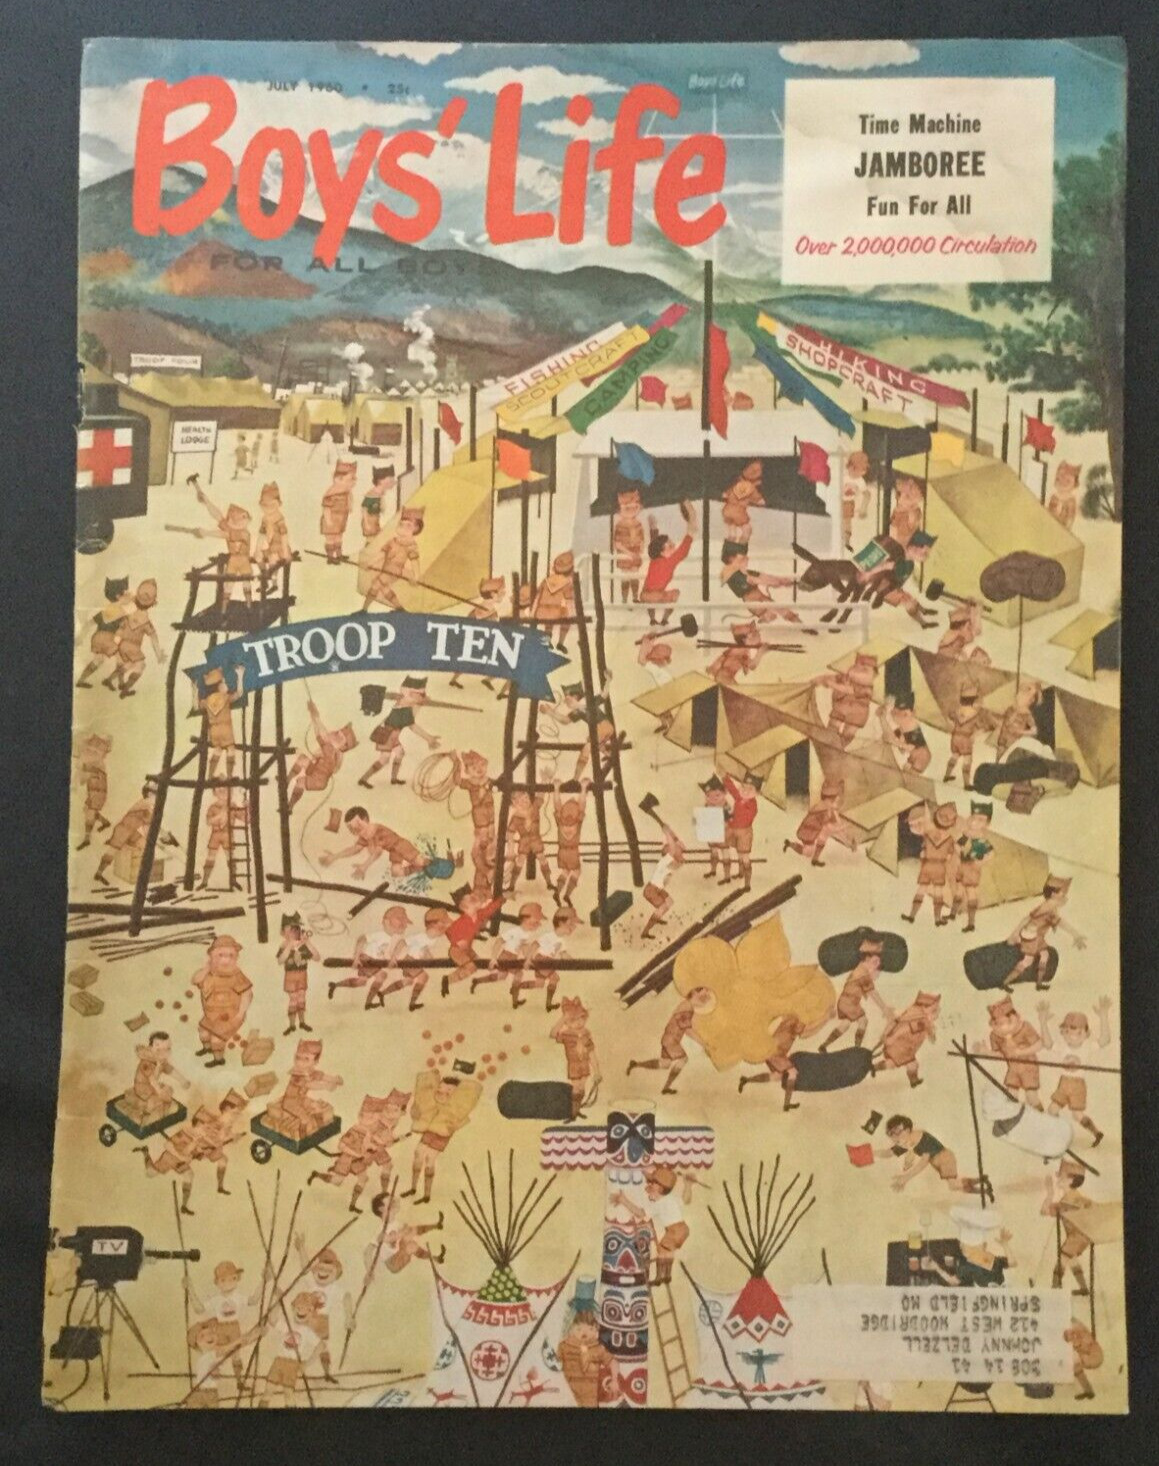 July 1960 Boys Life VTG Magazine Cover ~ Boy Scout Jamboree Comic Illustration